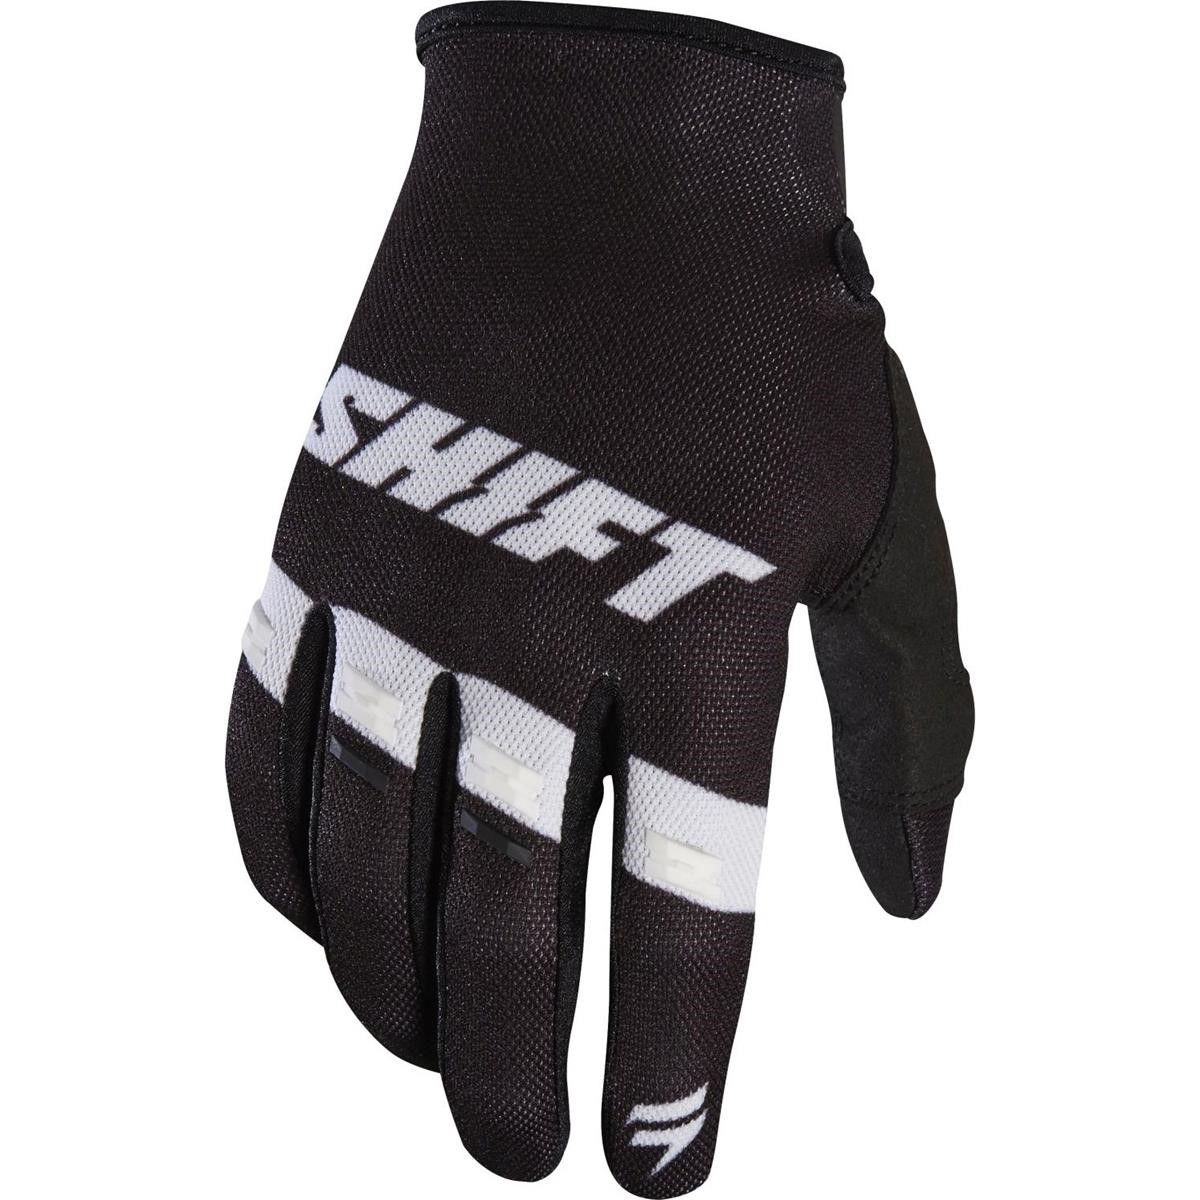 Shift Gloves Whit3 Air Black/White -Tarmac